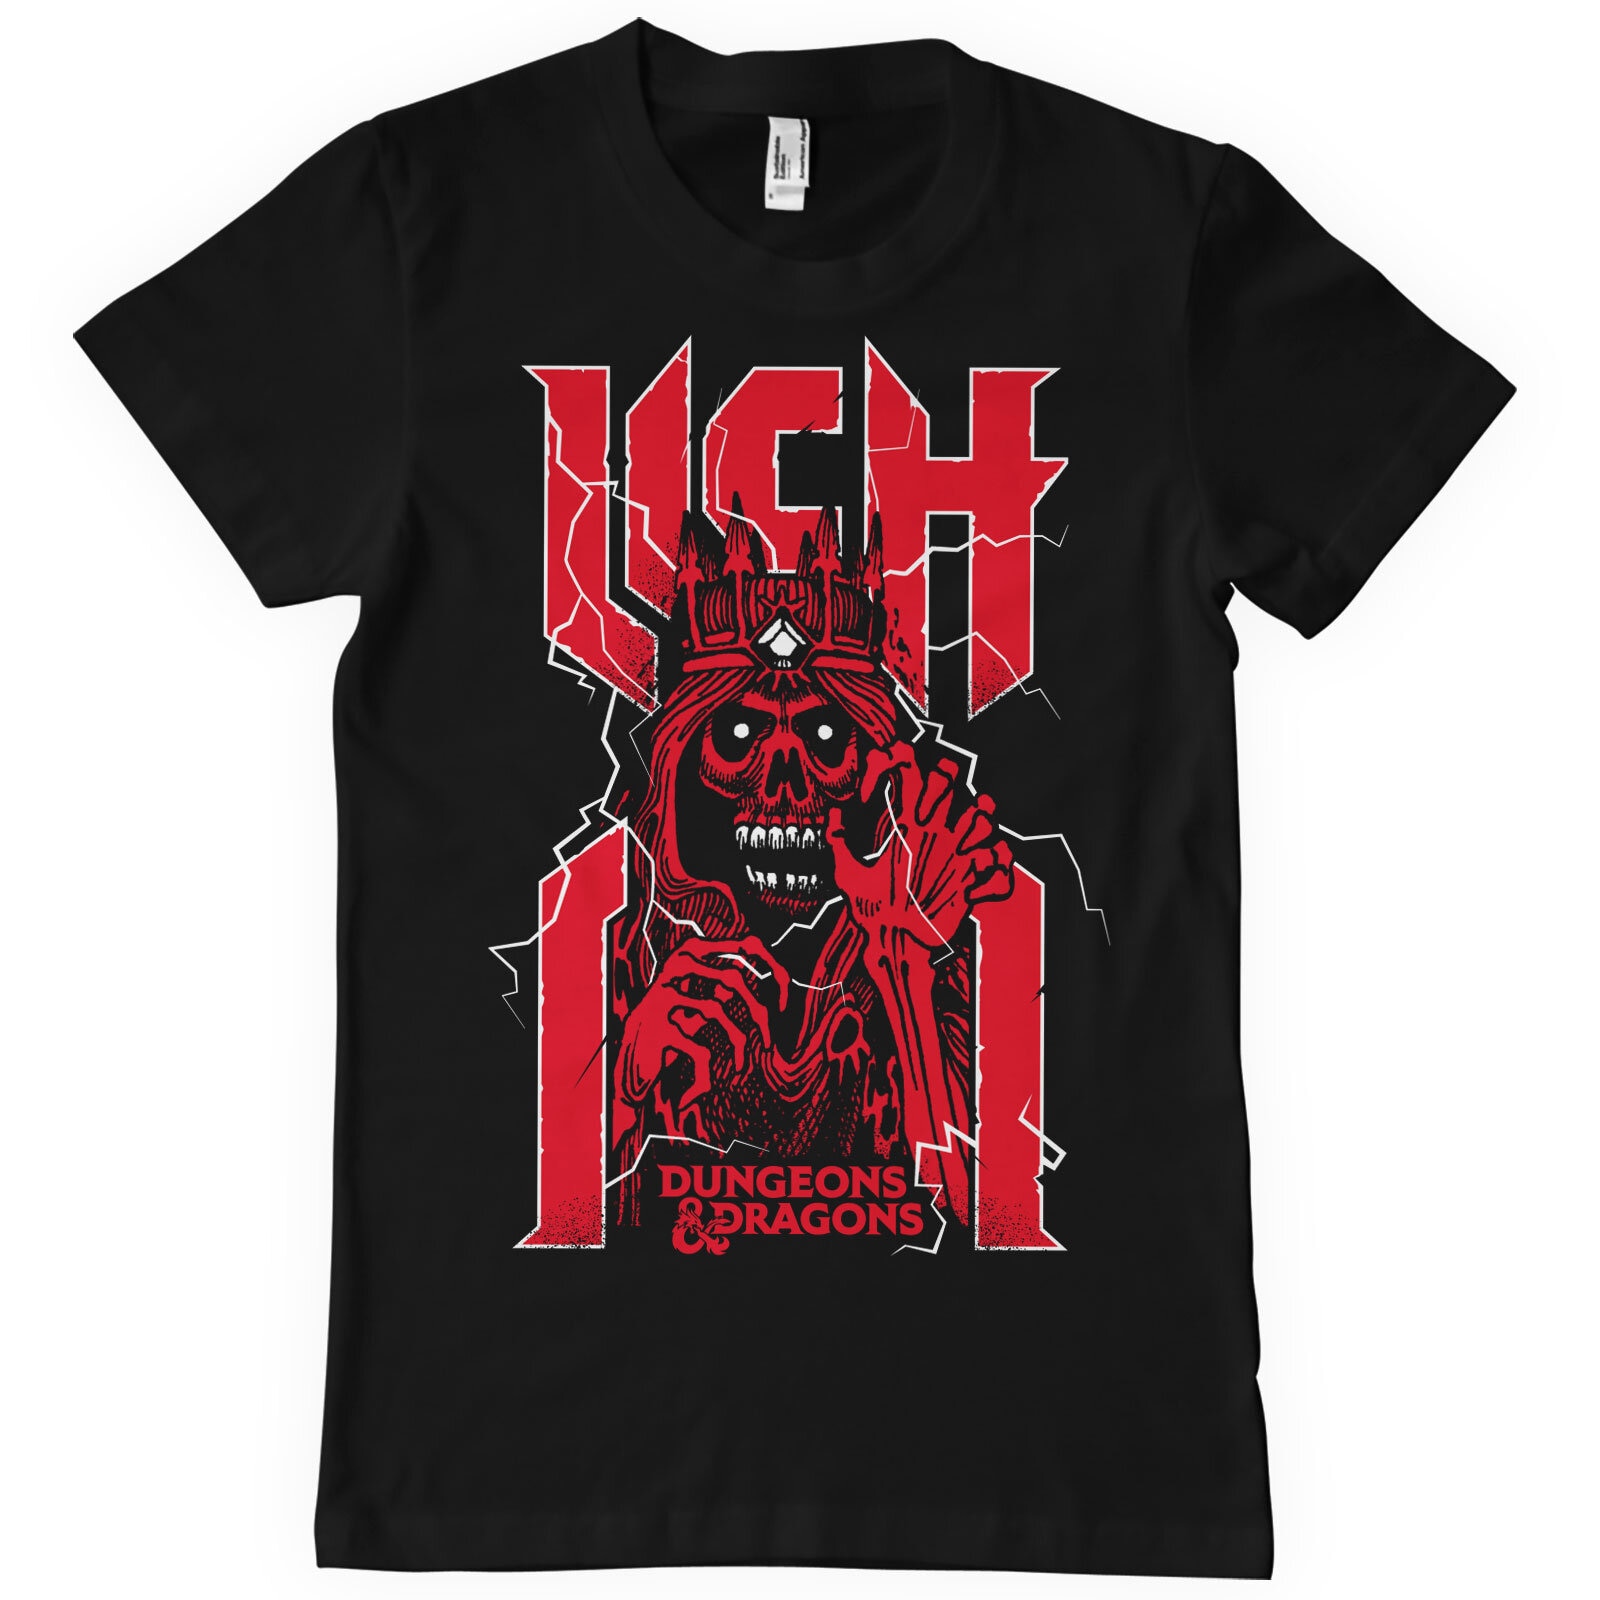 Lich King T-Shirt